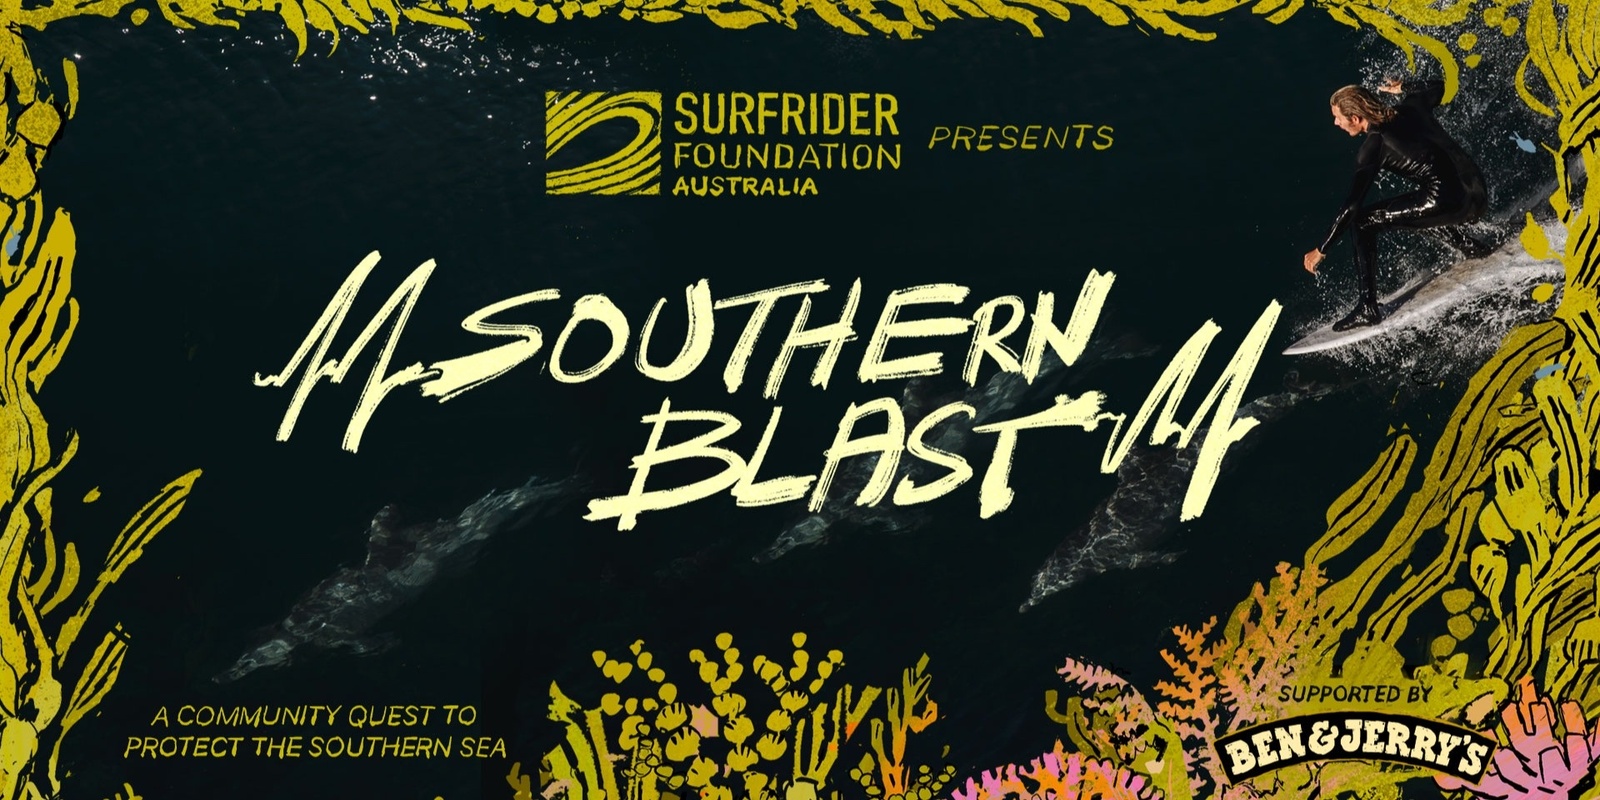 Surfrider Foundation Australia's banner